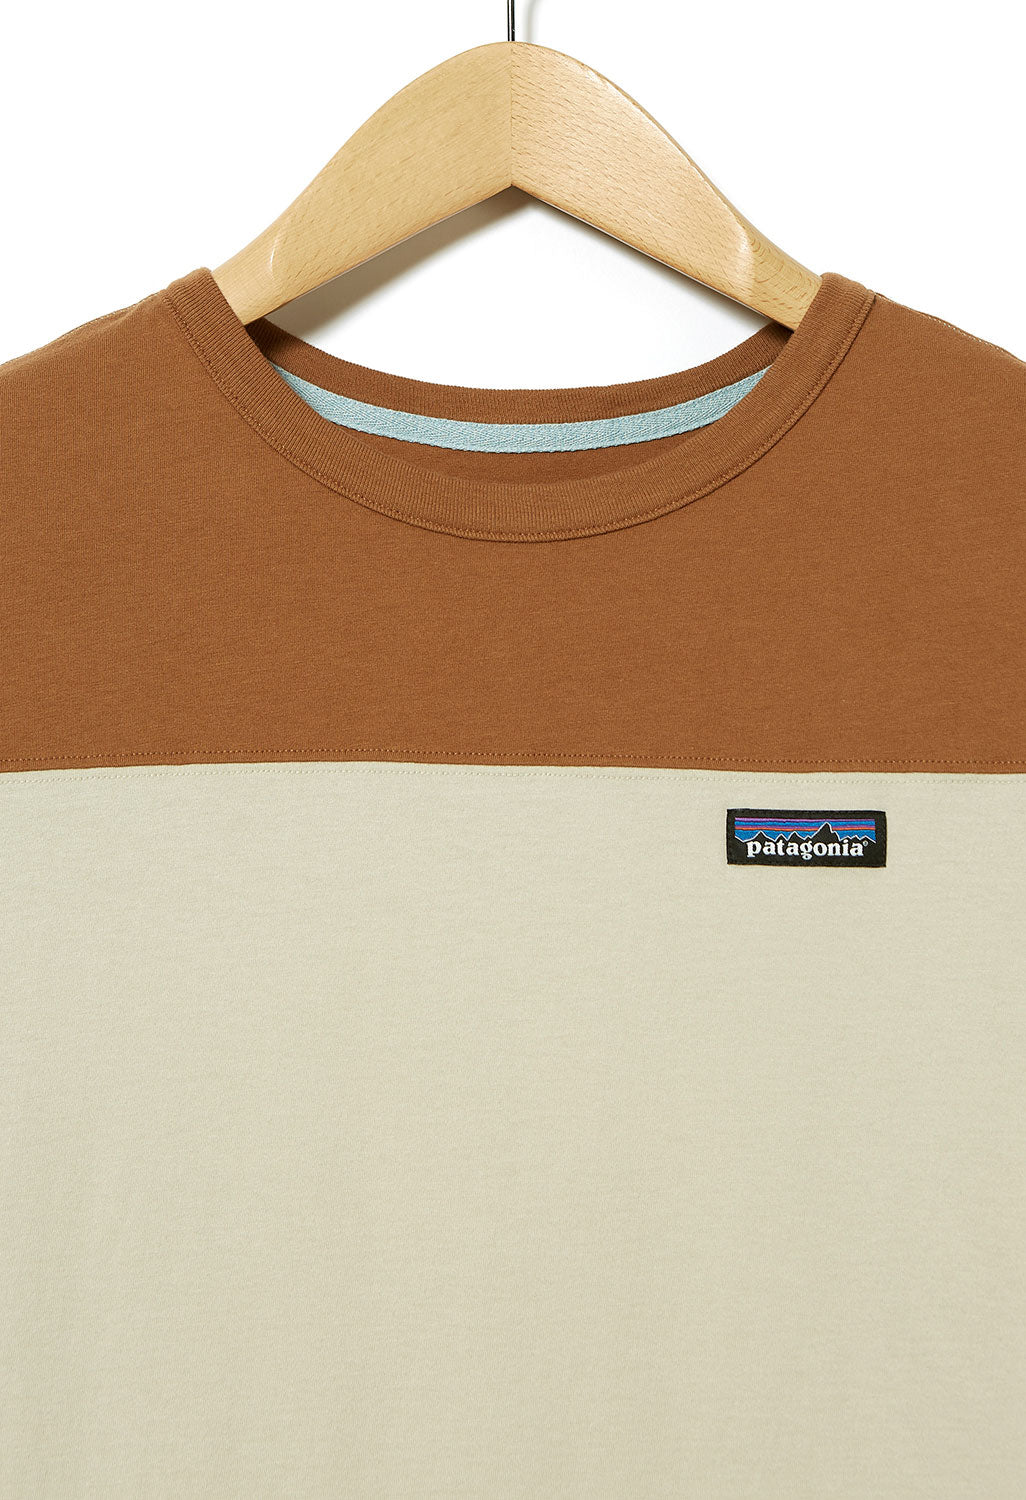 Patagonia Cotton in Conversion Men's T-Shirt - Pumice